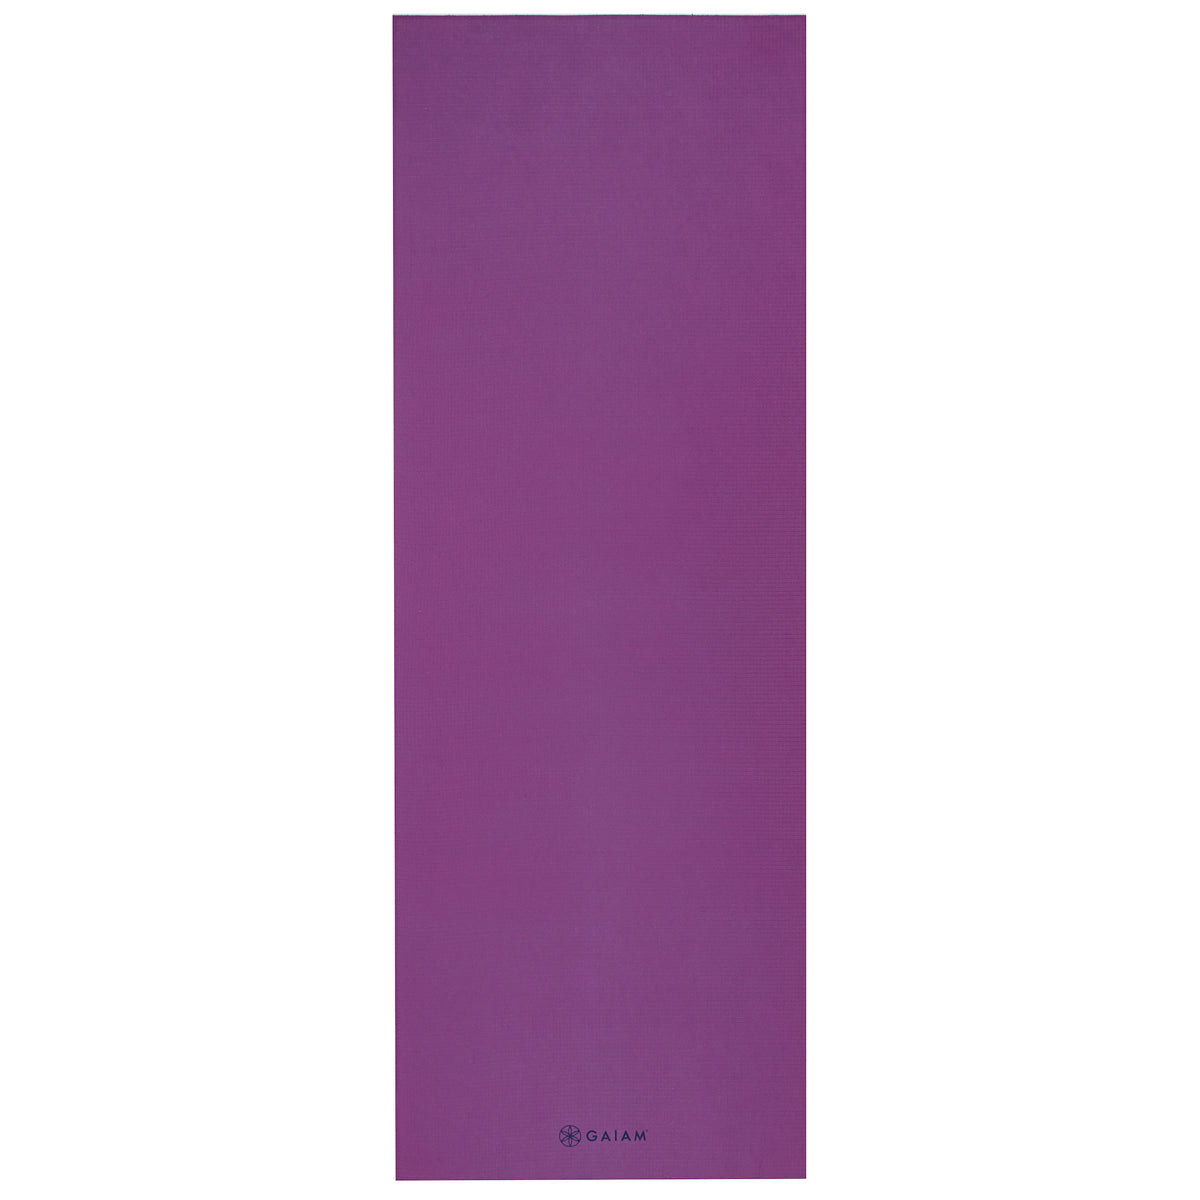  Gaiam Yoga Towel - Mat Sized Active Dry Non Slip